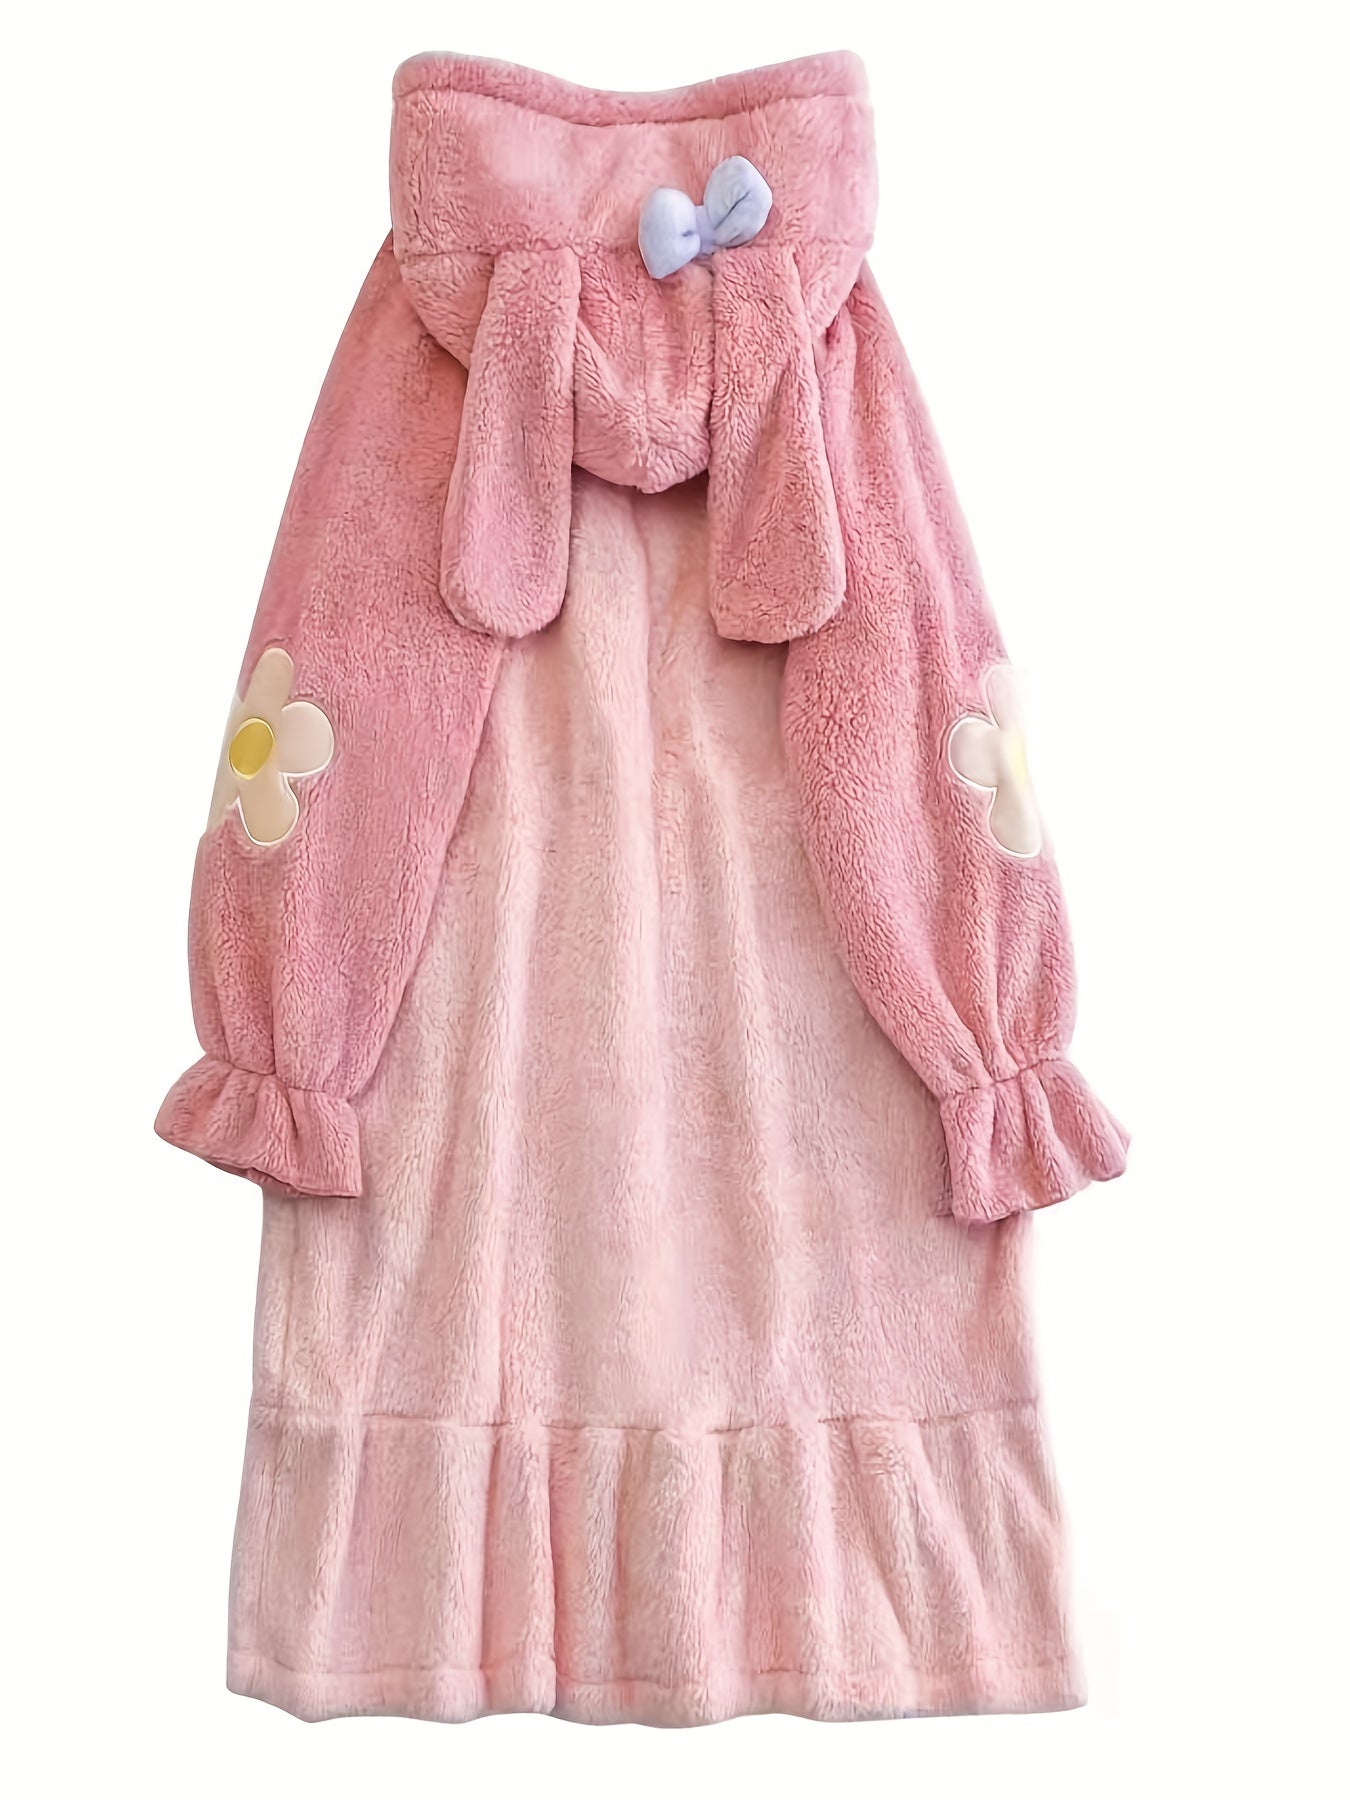 Antmvs Bunny Hooded Fuzzy Night Robe, Cute Long Sleeve Buttons Ruffle Robe With Heart Shaped Pockets, Women's Sleepwear